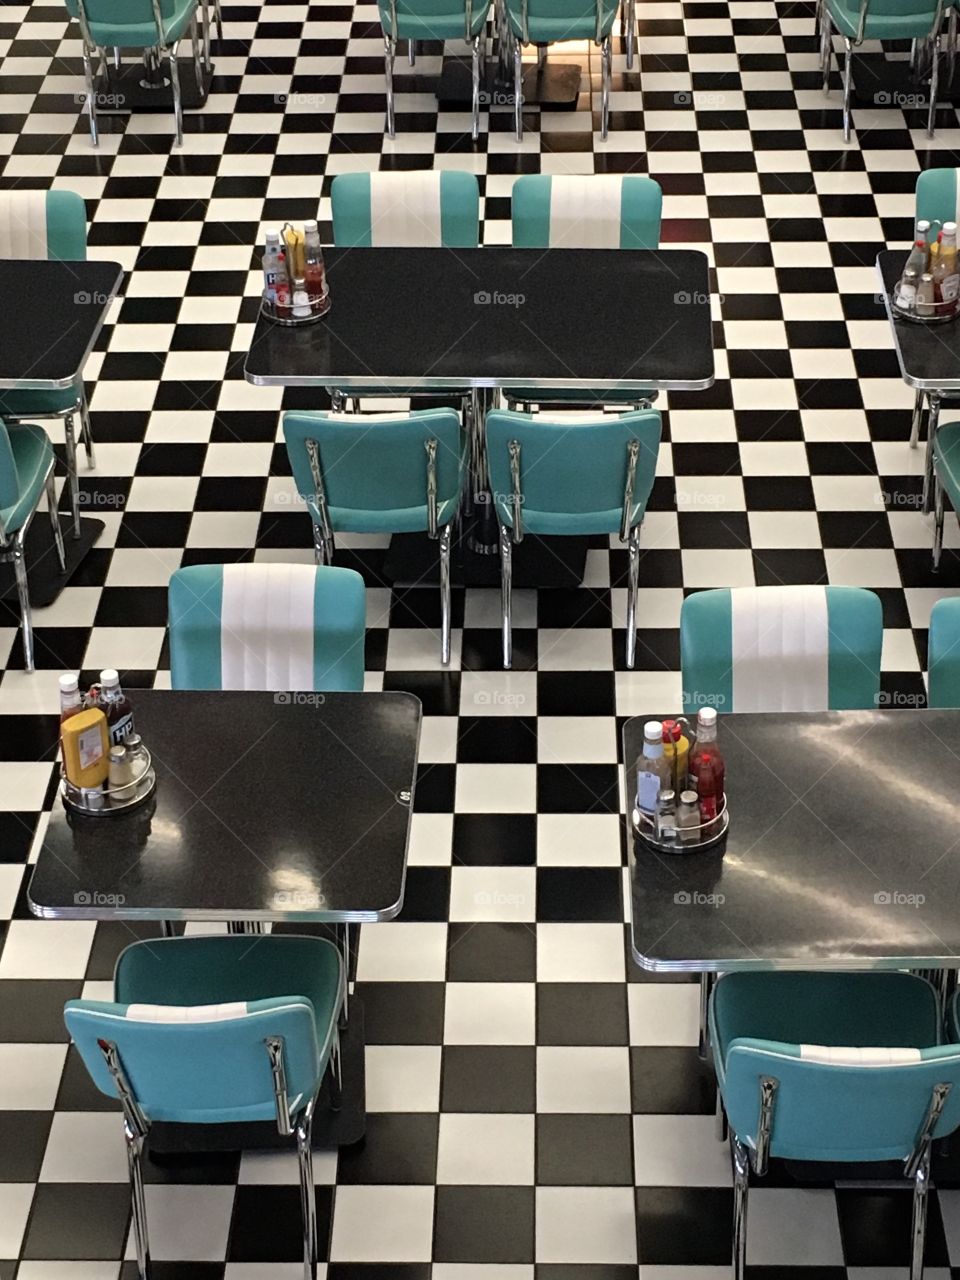 Retro restaurant,  checkered floor.